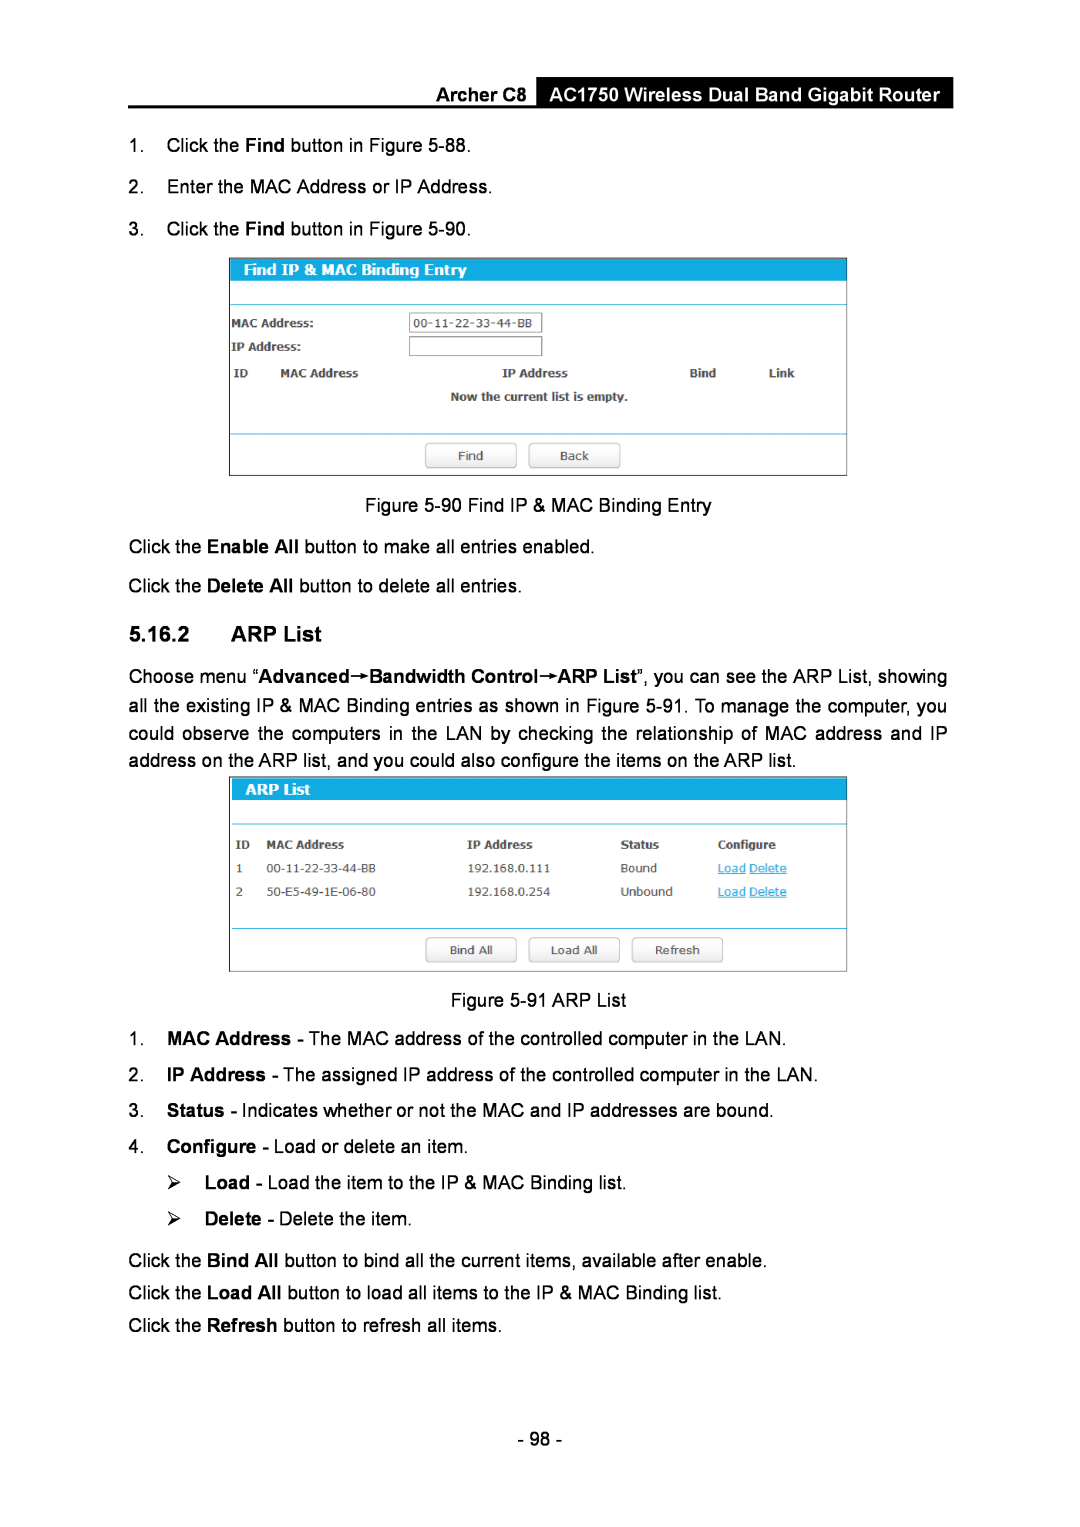 TP-Link manual ARP List, Archer C8 AC1750 Wireless Dual Band Gigabit Router 